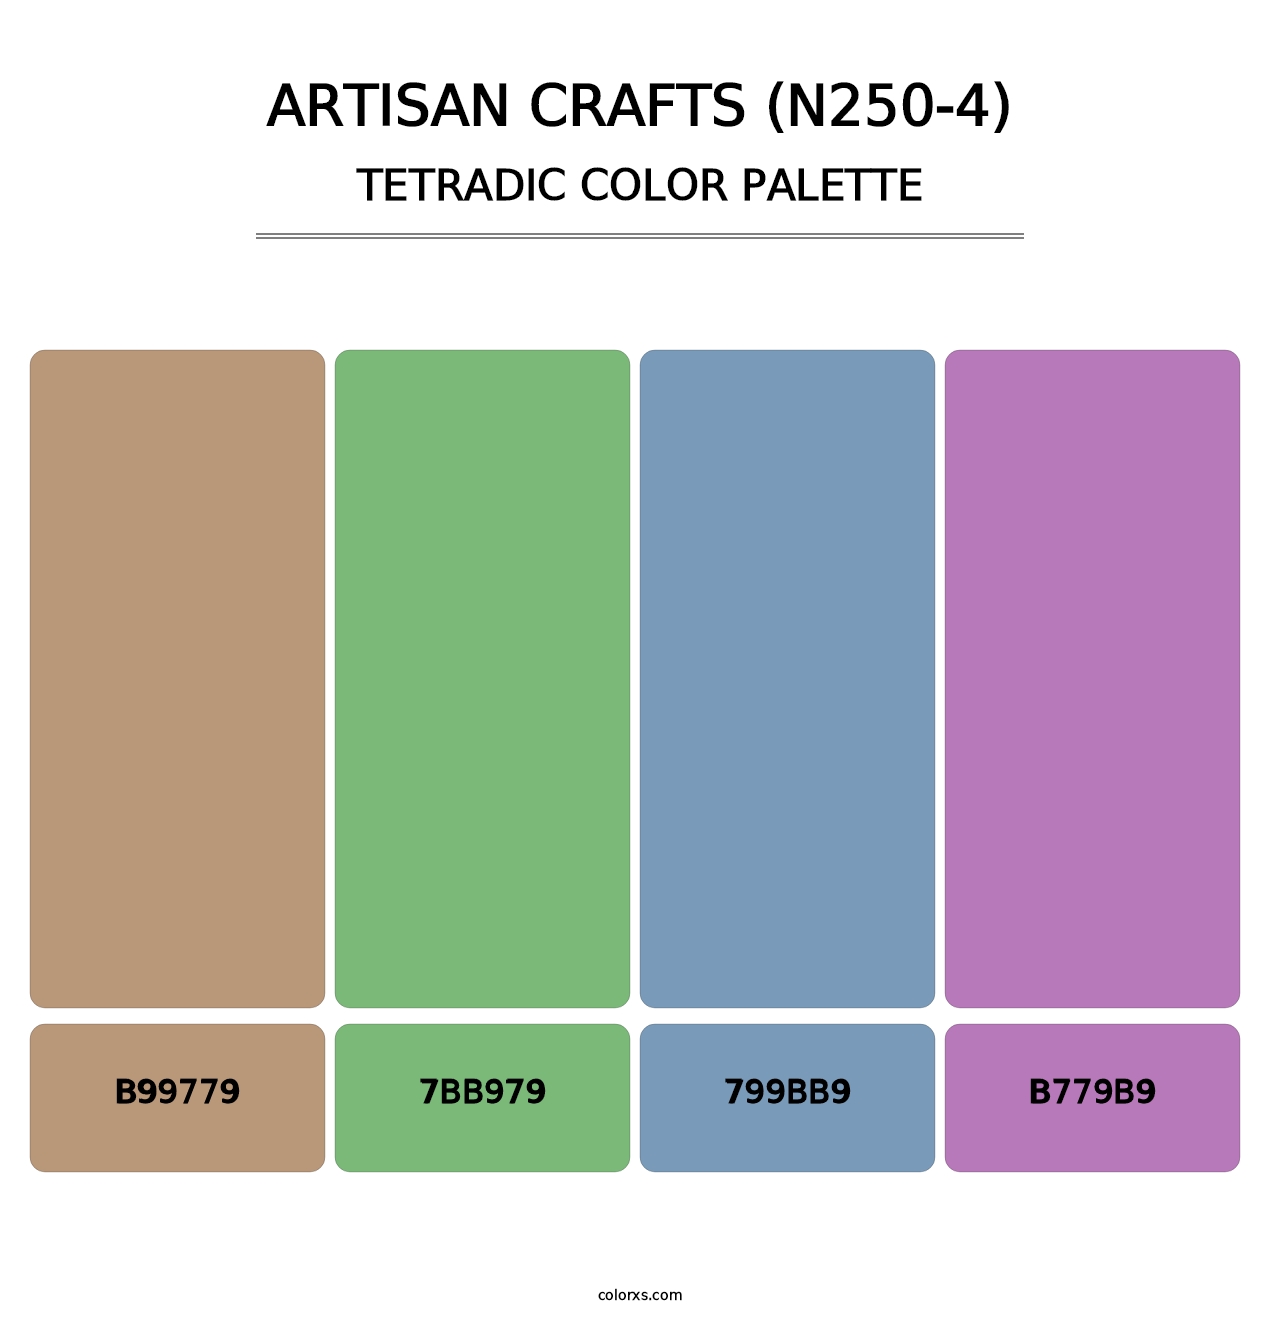 Artisan Crafts (N250-4) - Tetradic Color Palette